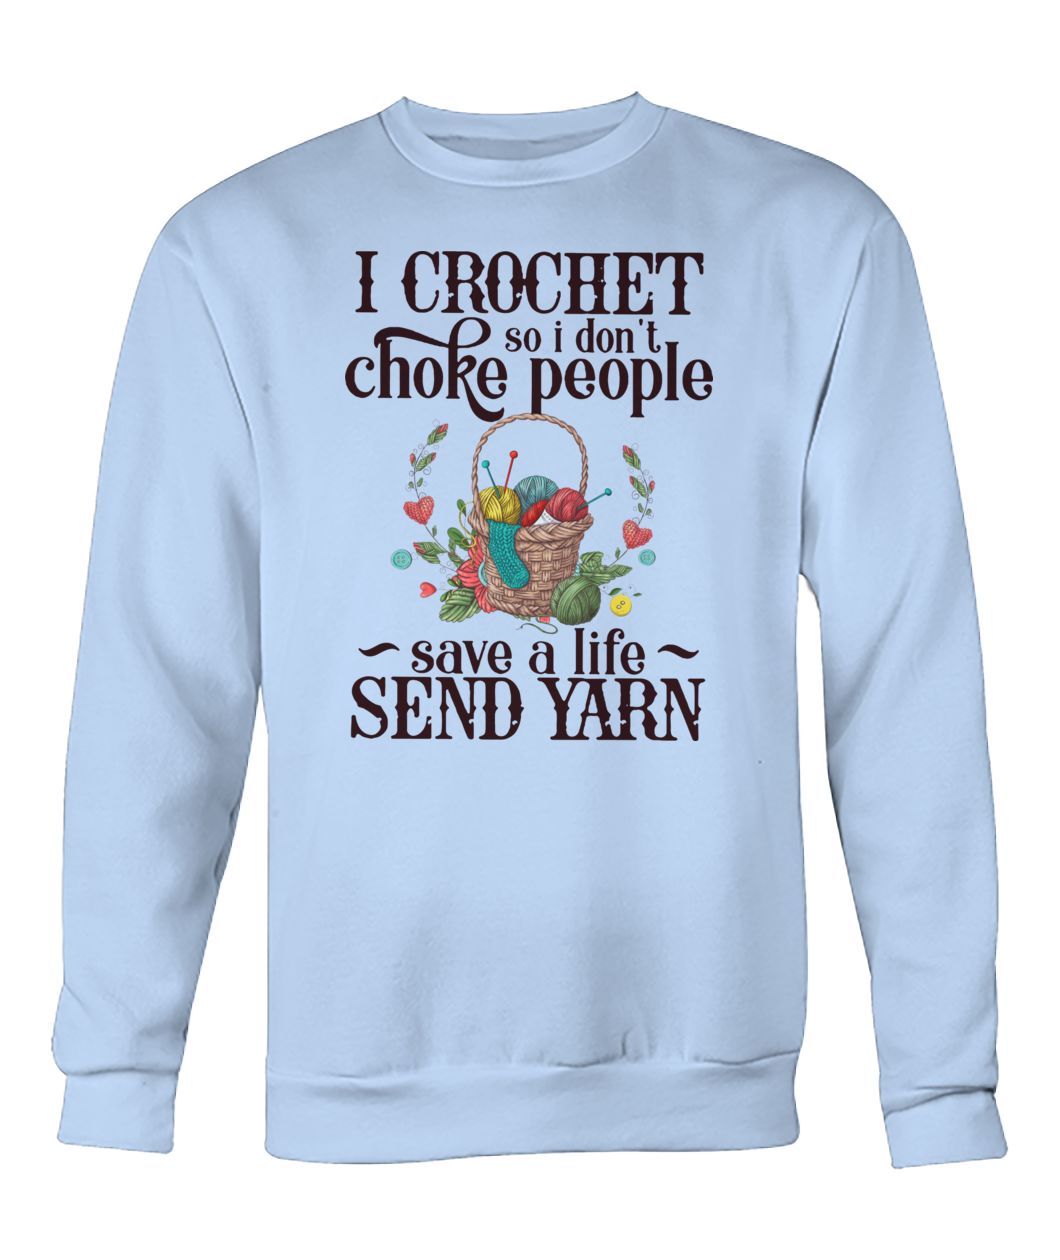 I crochet so I don't choke people save a life send yarn crew neck sweatshirt